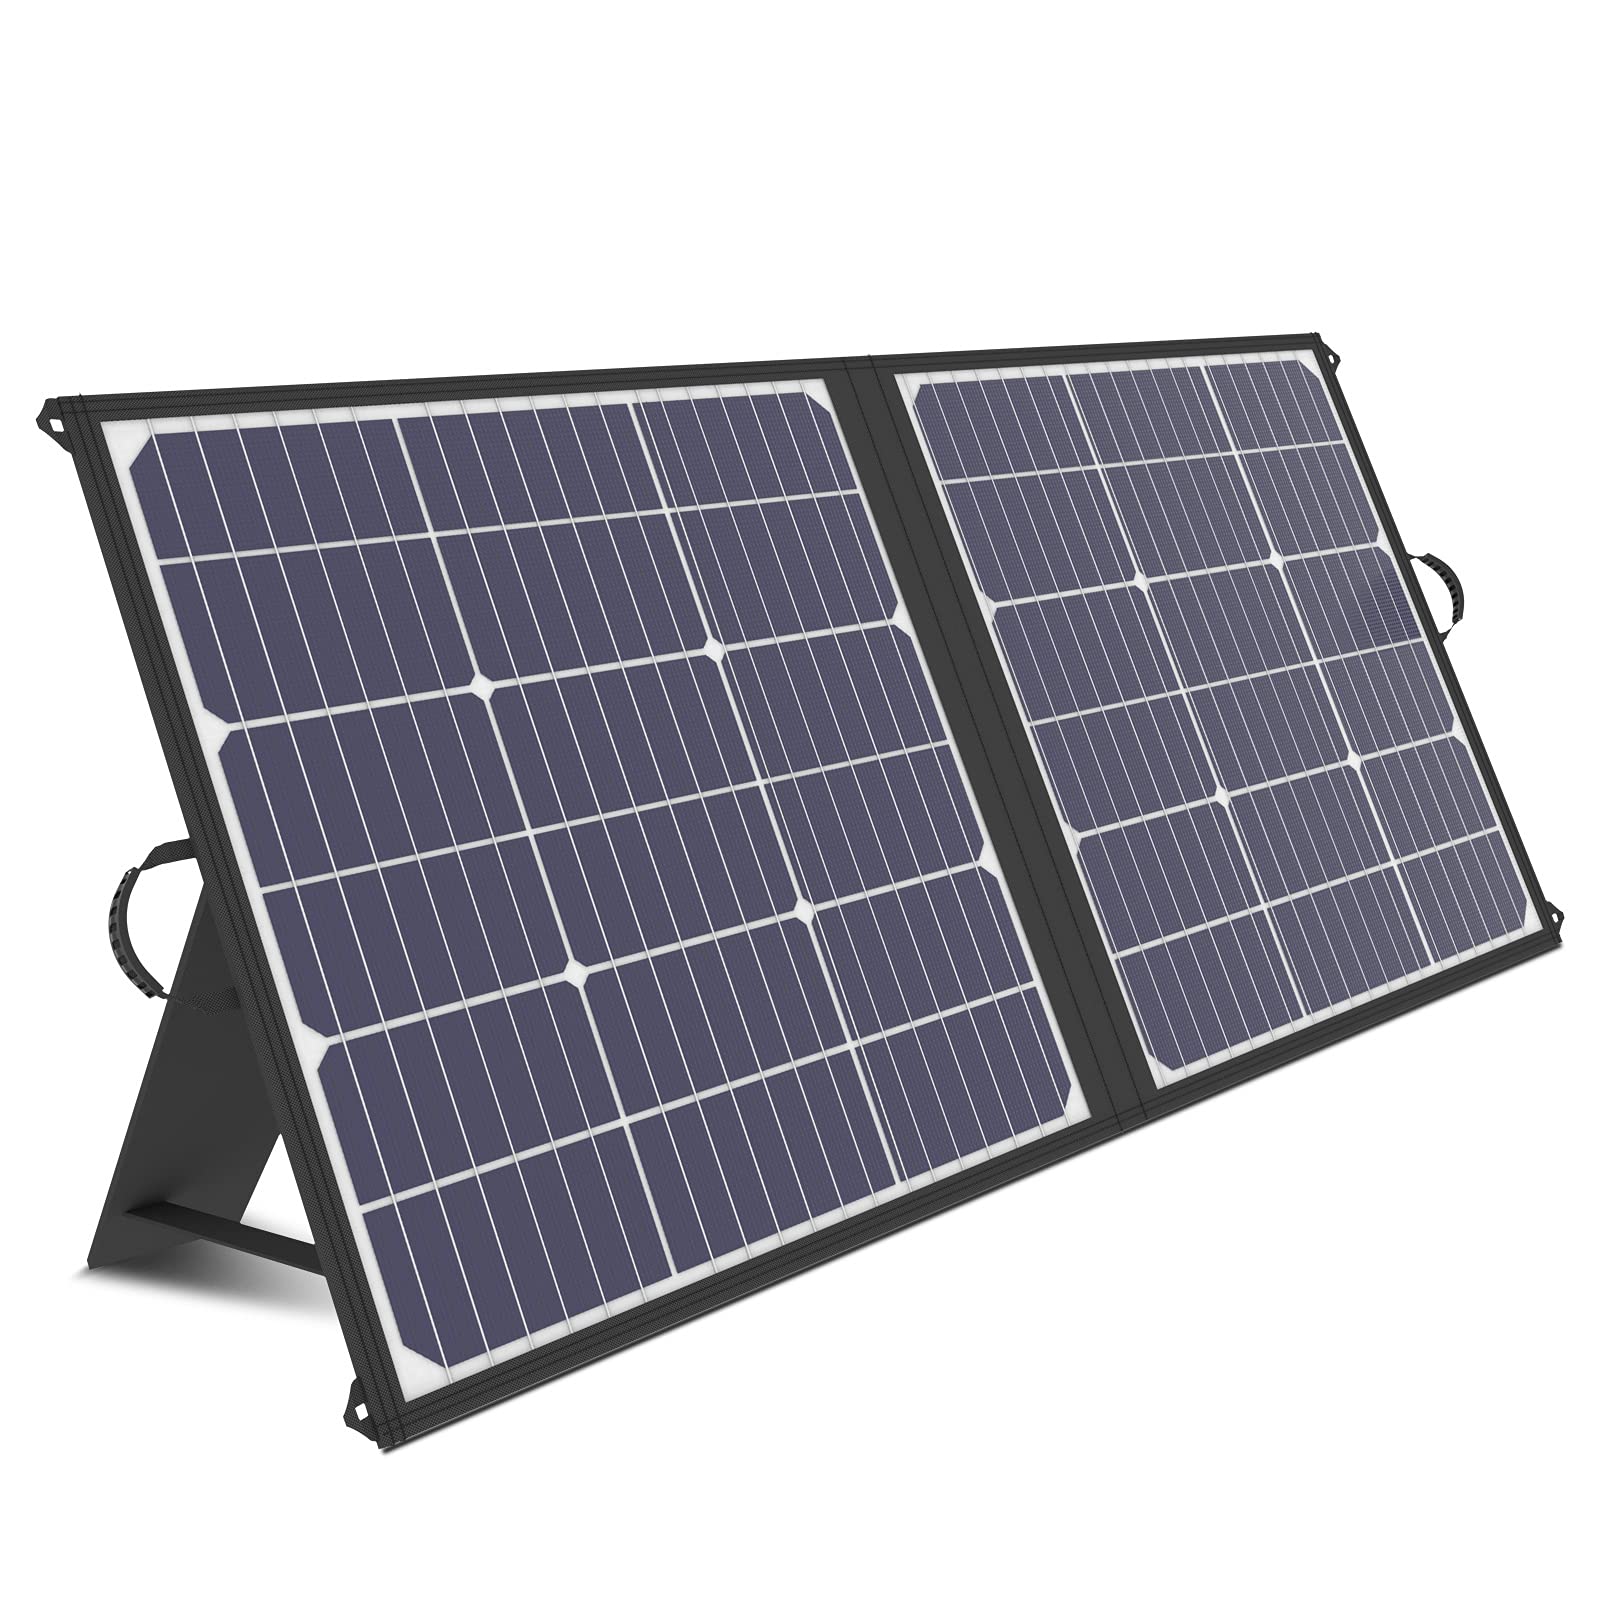 Solar Generator P600 | 600 W 626.4 Wh